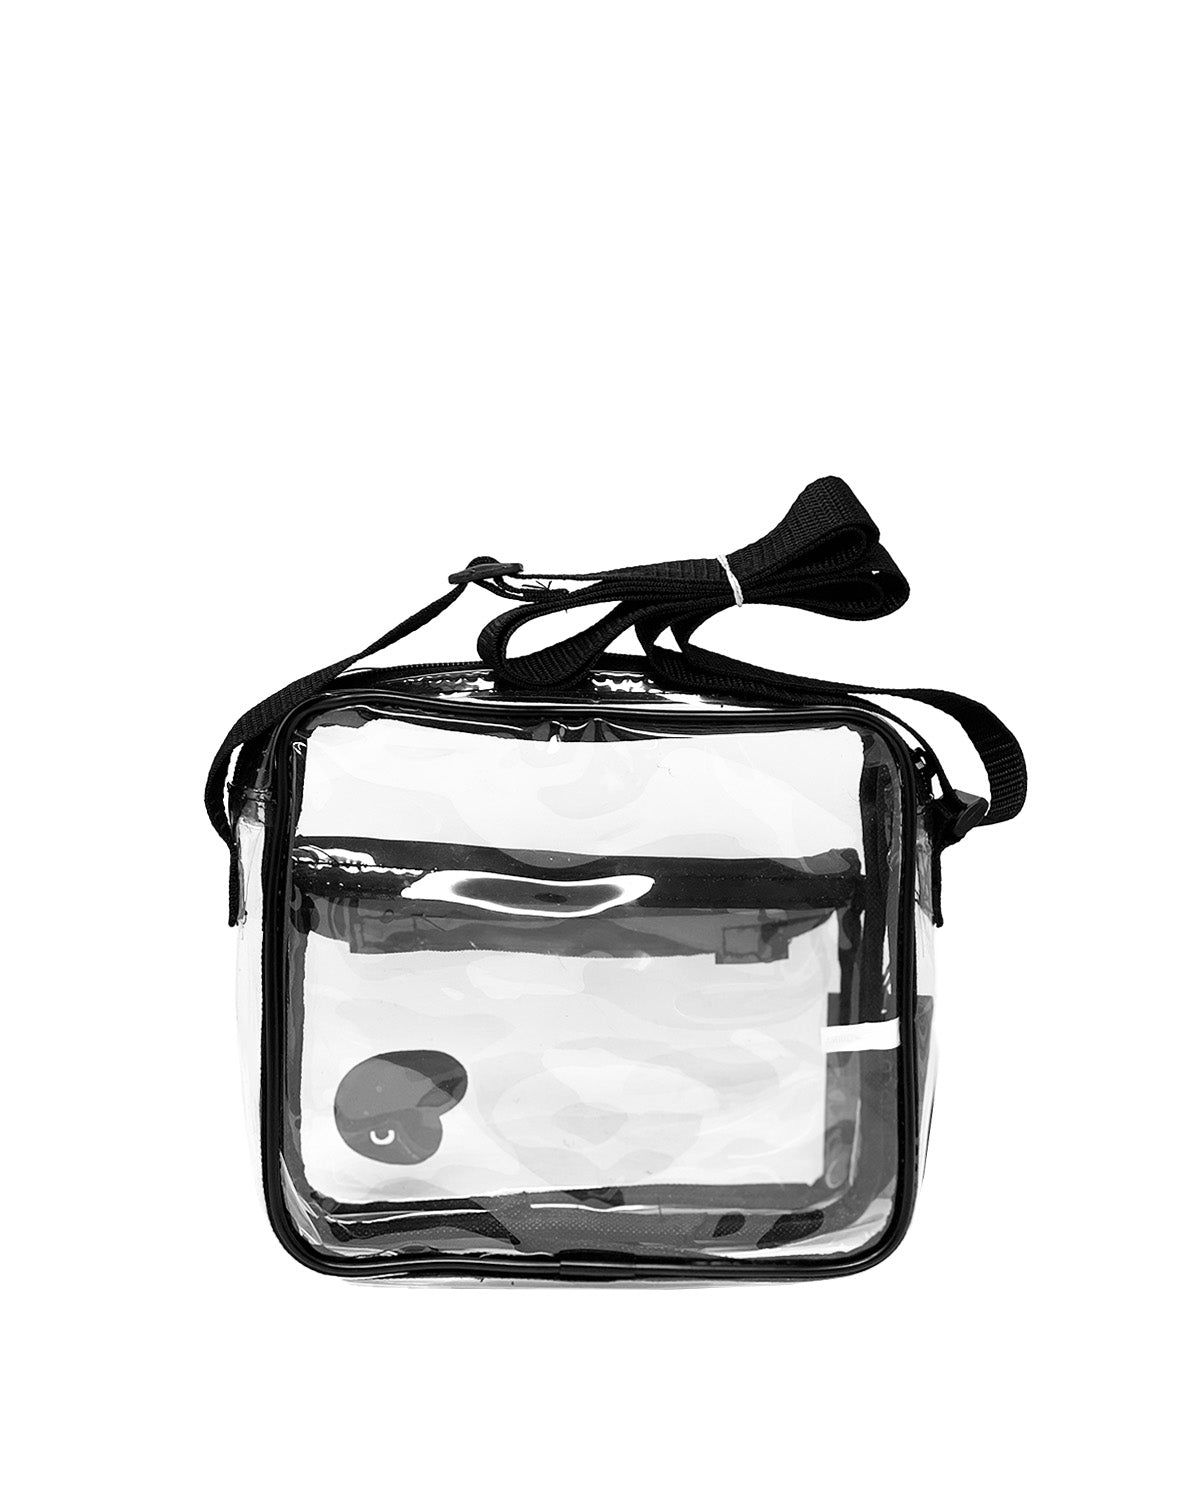 OCOMMO Clear Sidebag